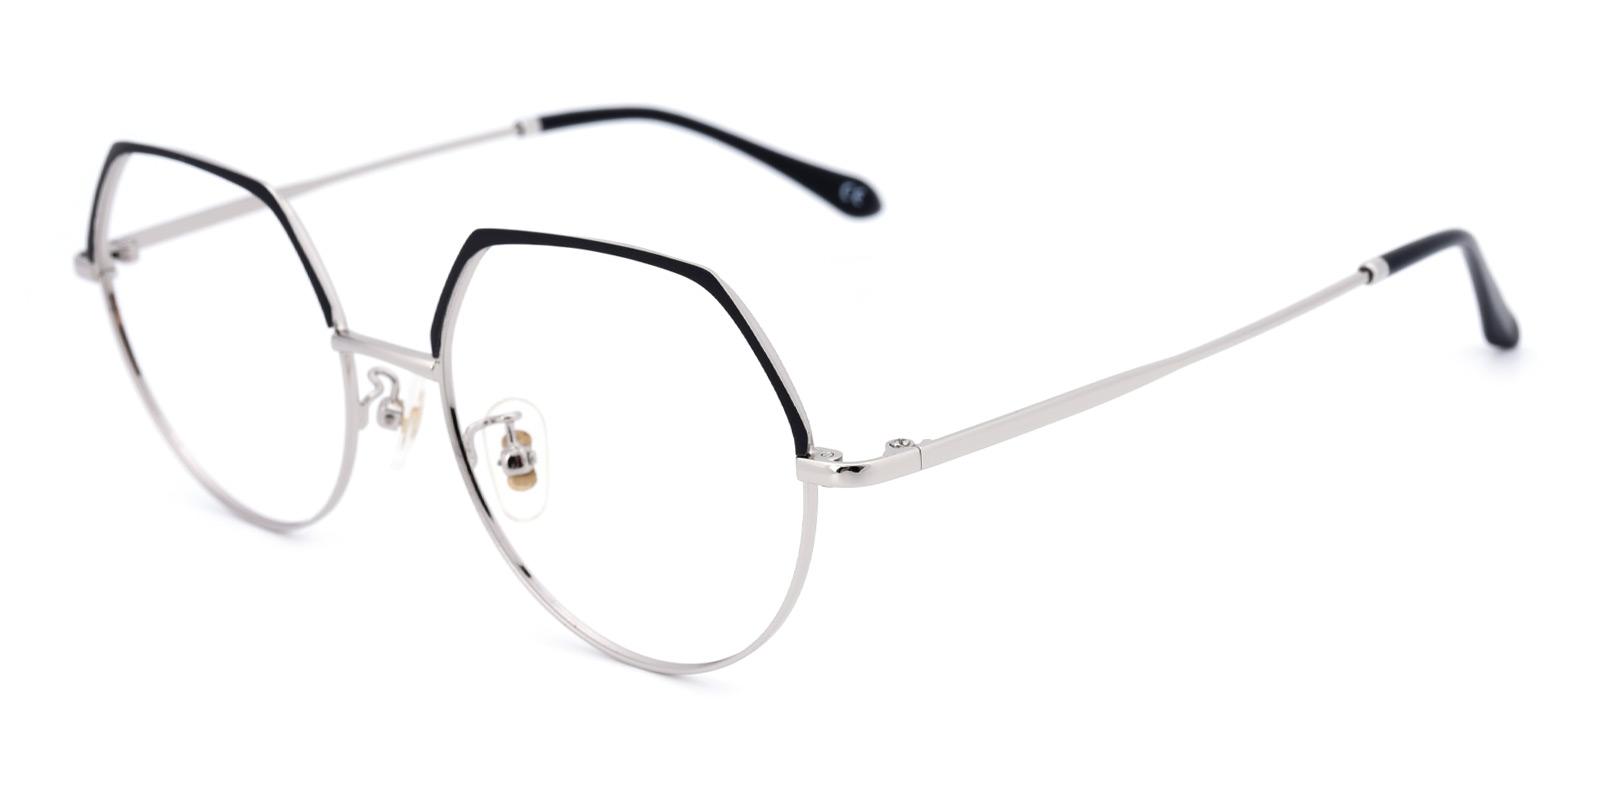 Nebula-Silver-Round / Geometric-Metal-Eyeglasses-detail